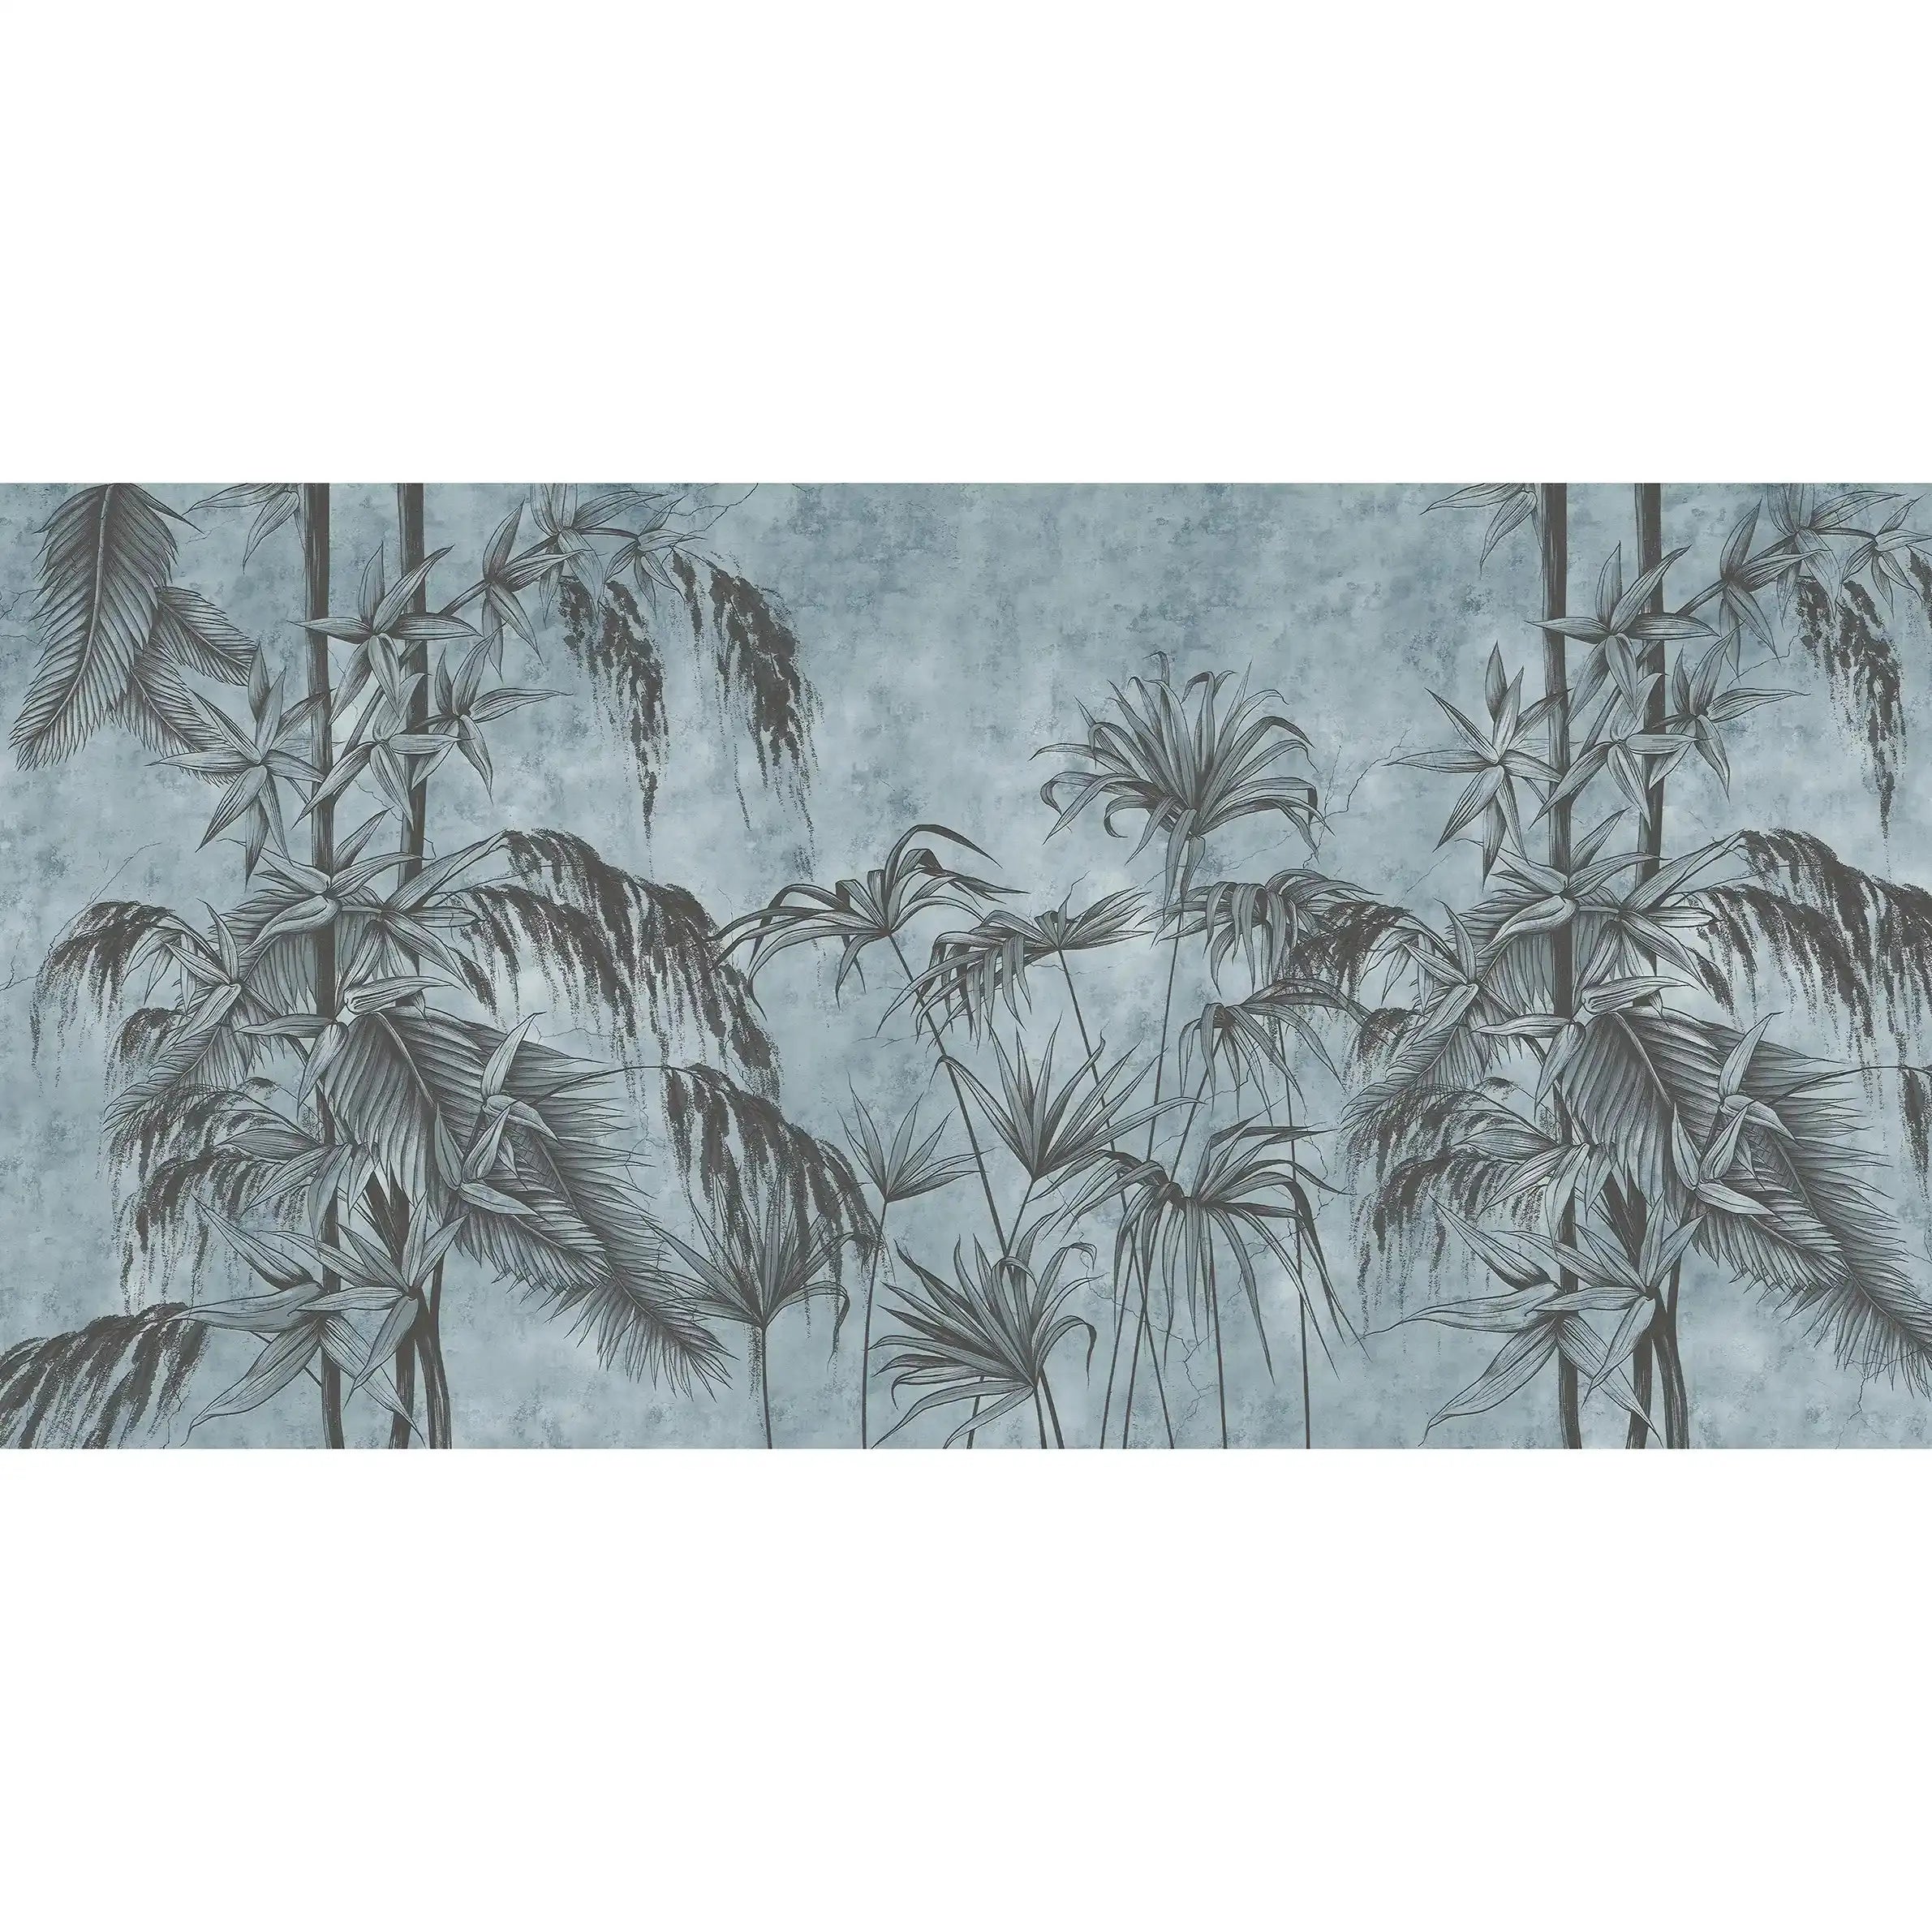 3001-C / Botanical Peel and Stick Wallpaper - Wild Floral, Tropical Leaf Wall Mural, Self Adhesive & Removable Design for Room, Shelf, Drawer Liner - Artevella